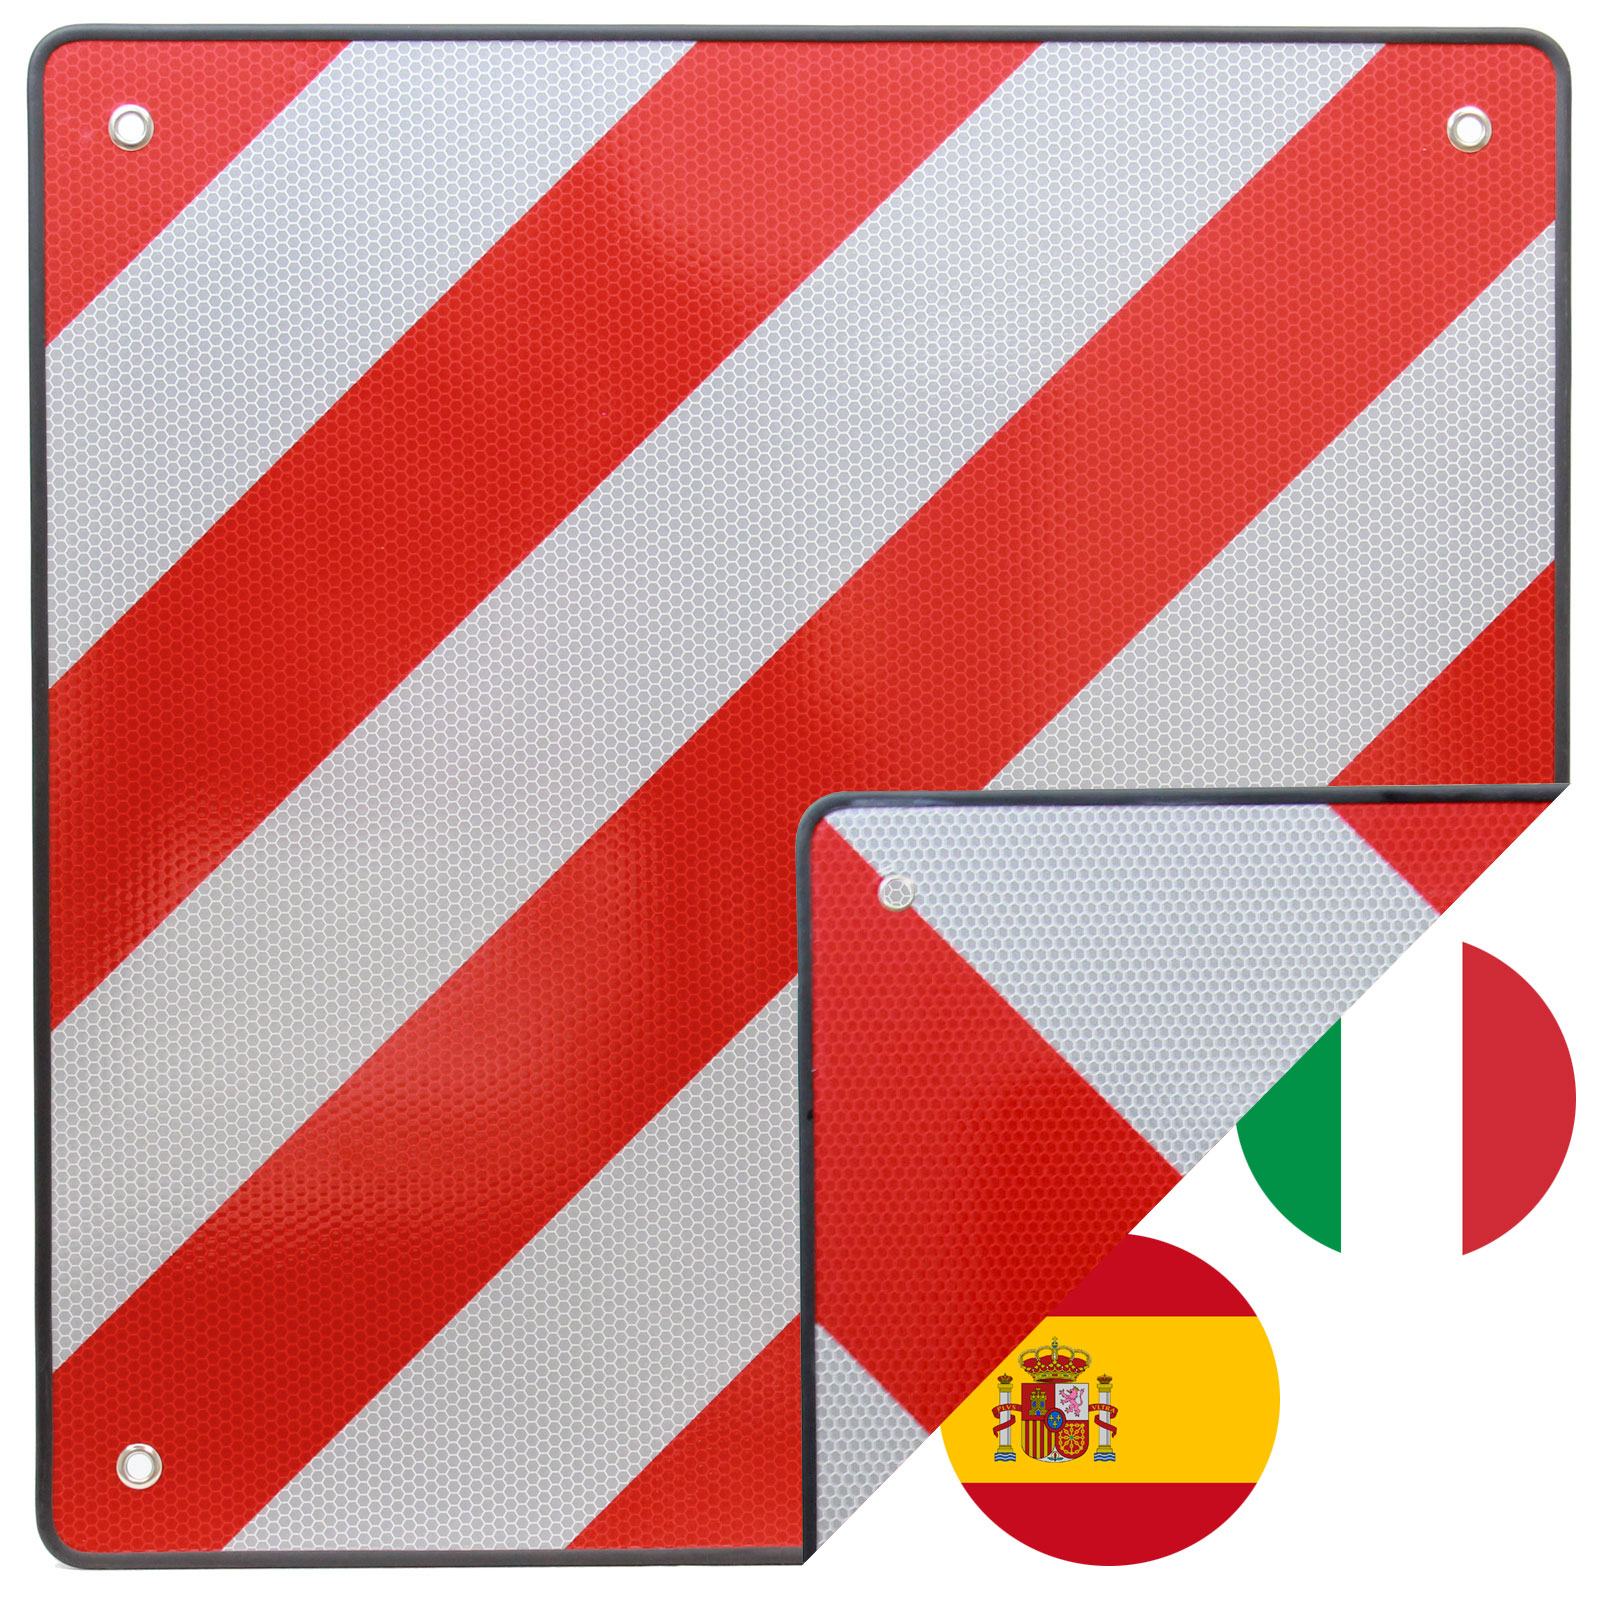 SWANEW Warntafel Hinweisschilder Spanien&Italien 50x50cm Gepäckträger PKW  Warntafeln Warnschild 2 in1